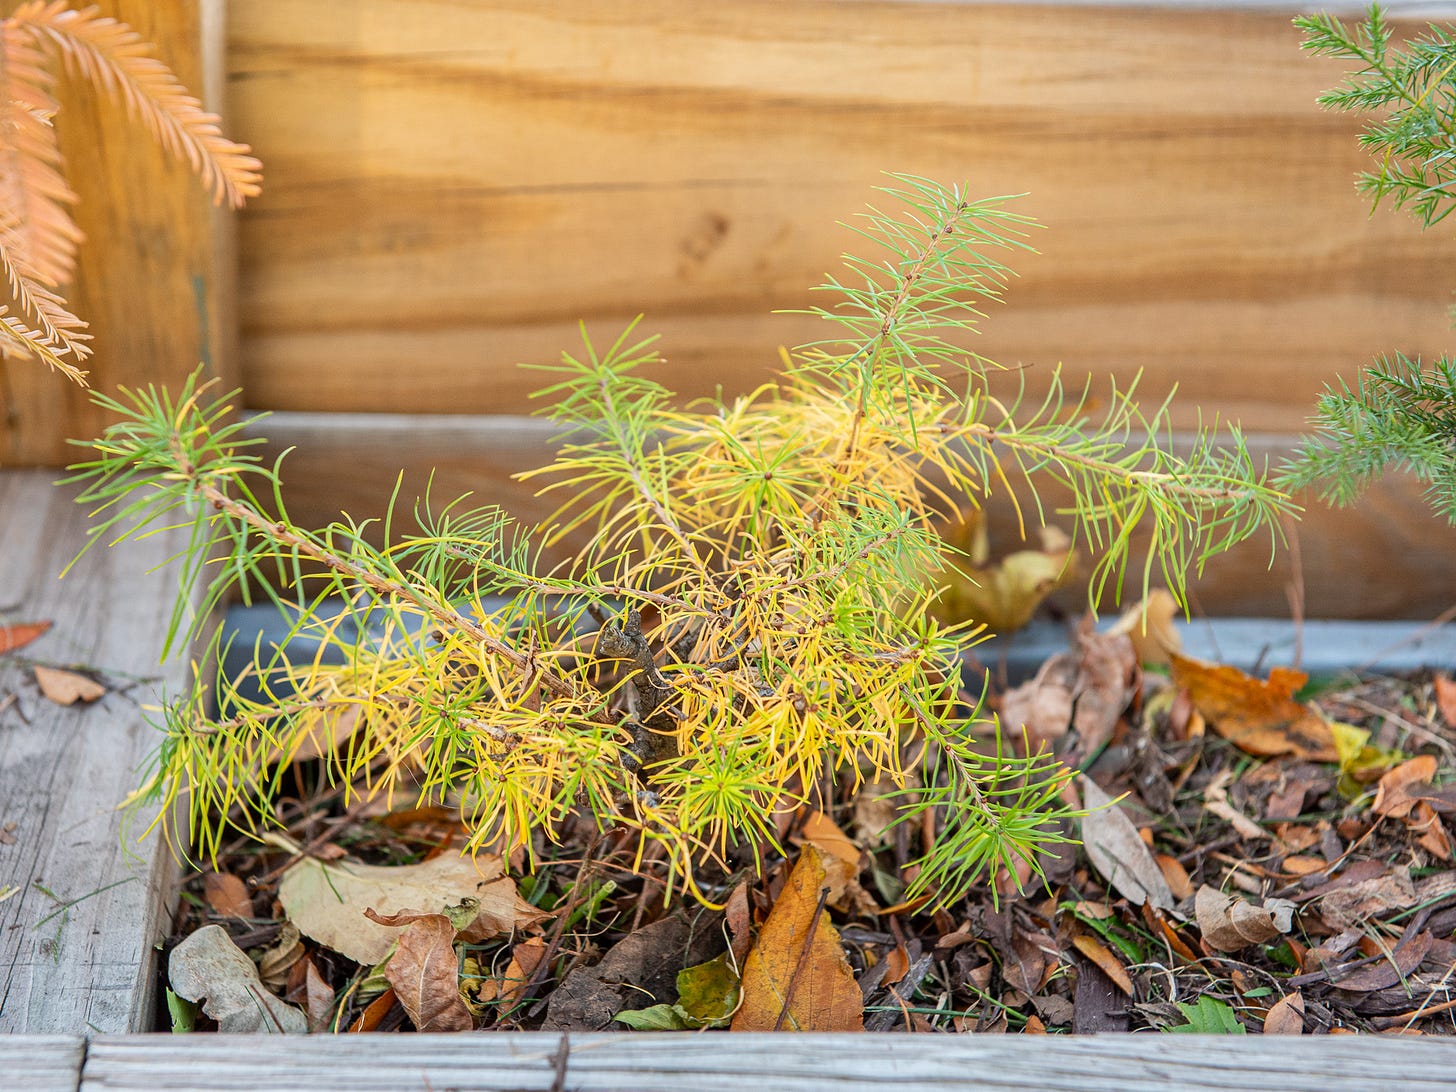 ID: Larch bonsai showing fall colors